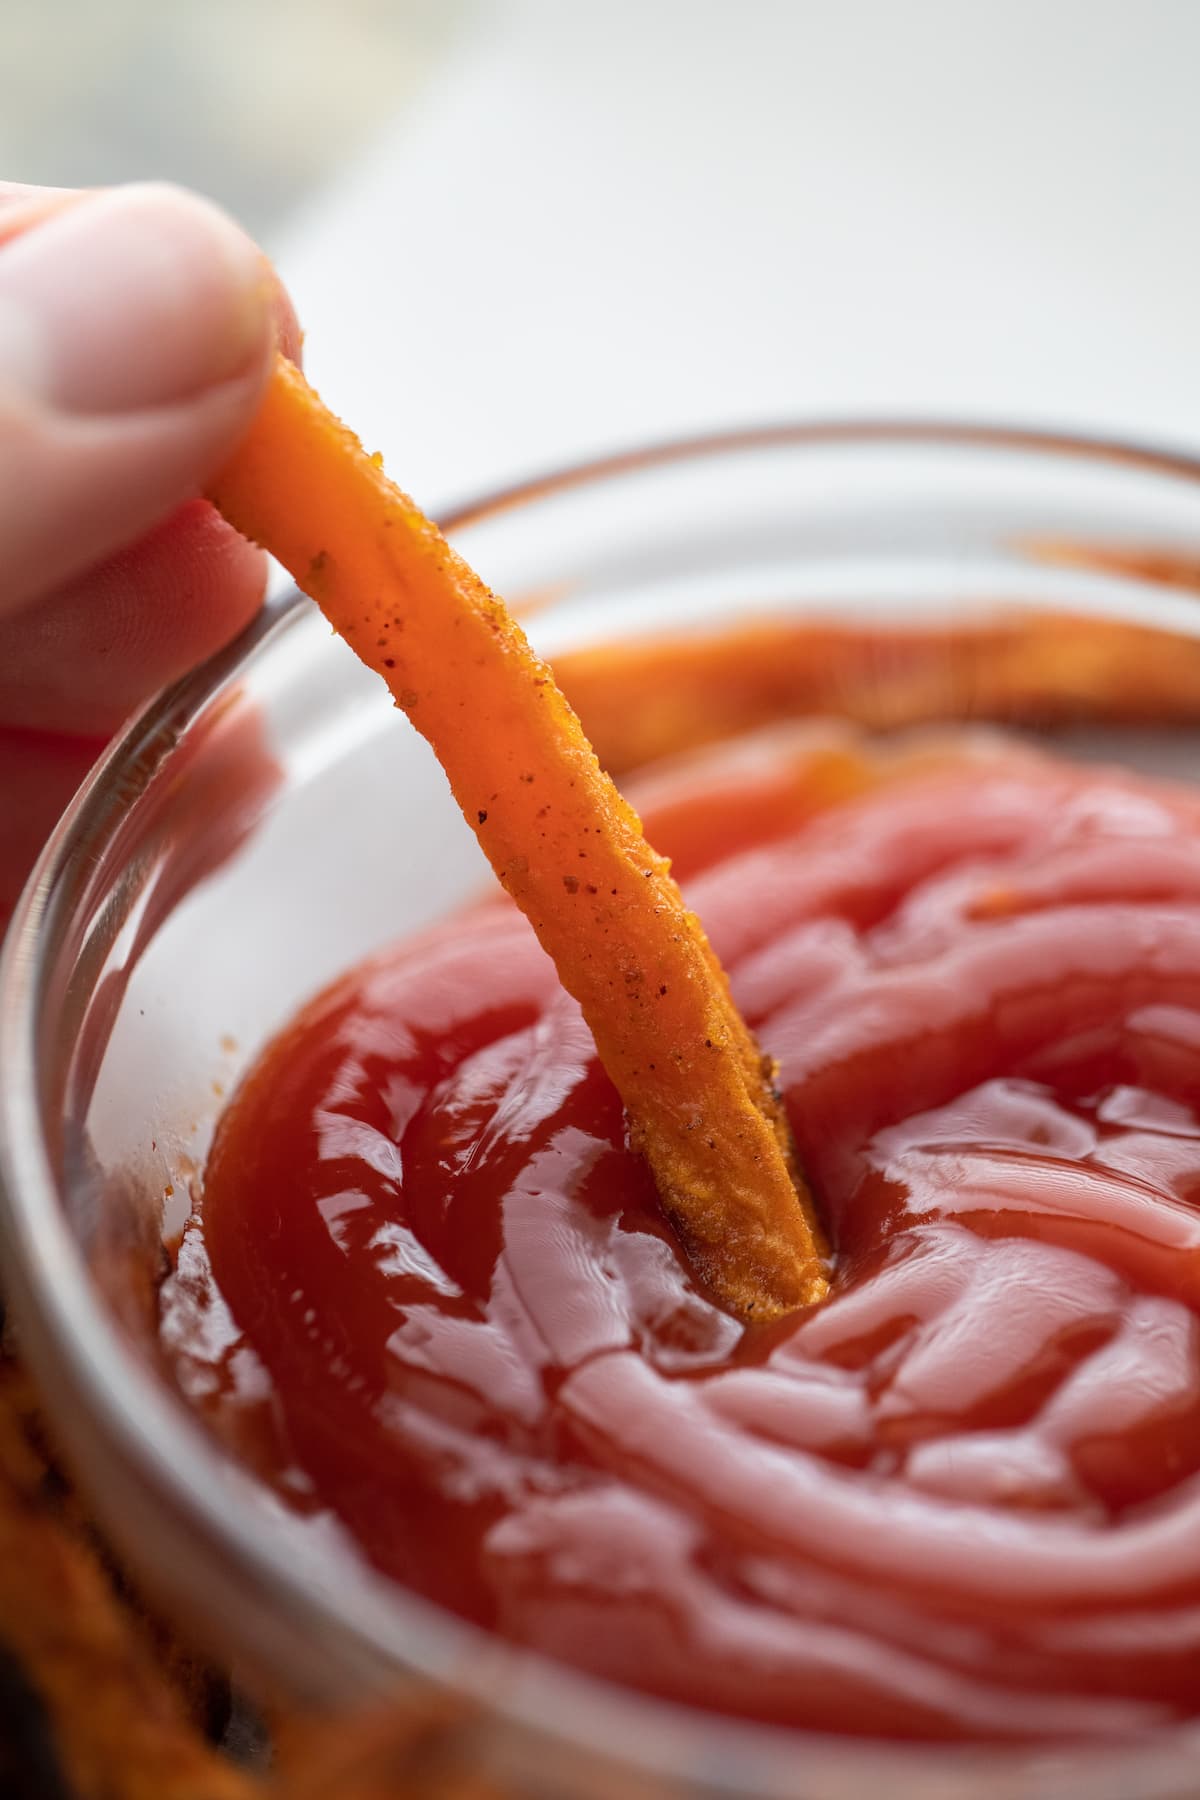 dipping sweet potato fry into ketchup